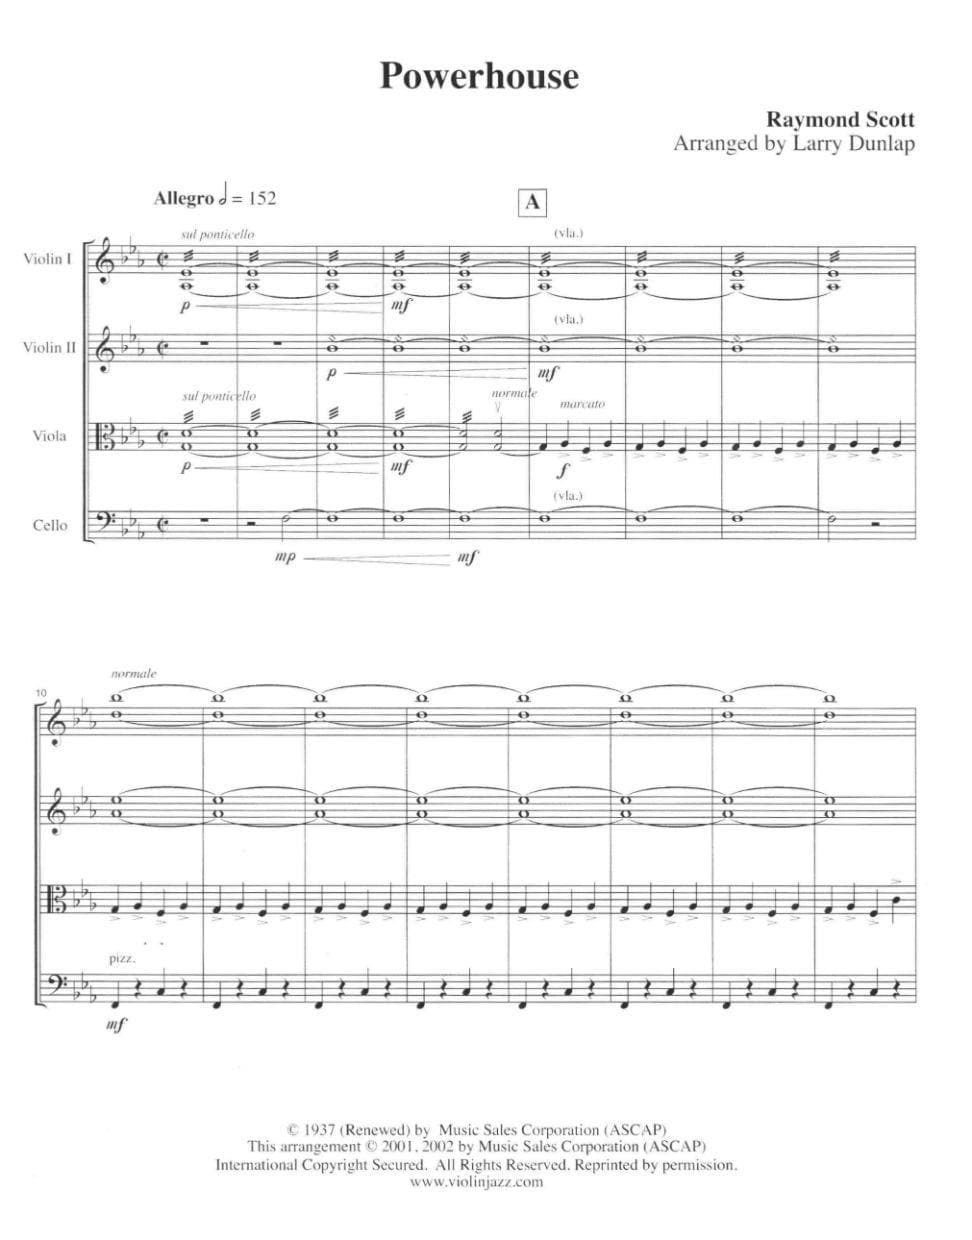 Scott, Raymond - Powerhouse - Jeremy Cohen Arrangements - arranged by Larry Dunlap - Violinjazz Editions